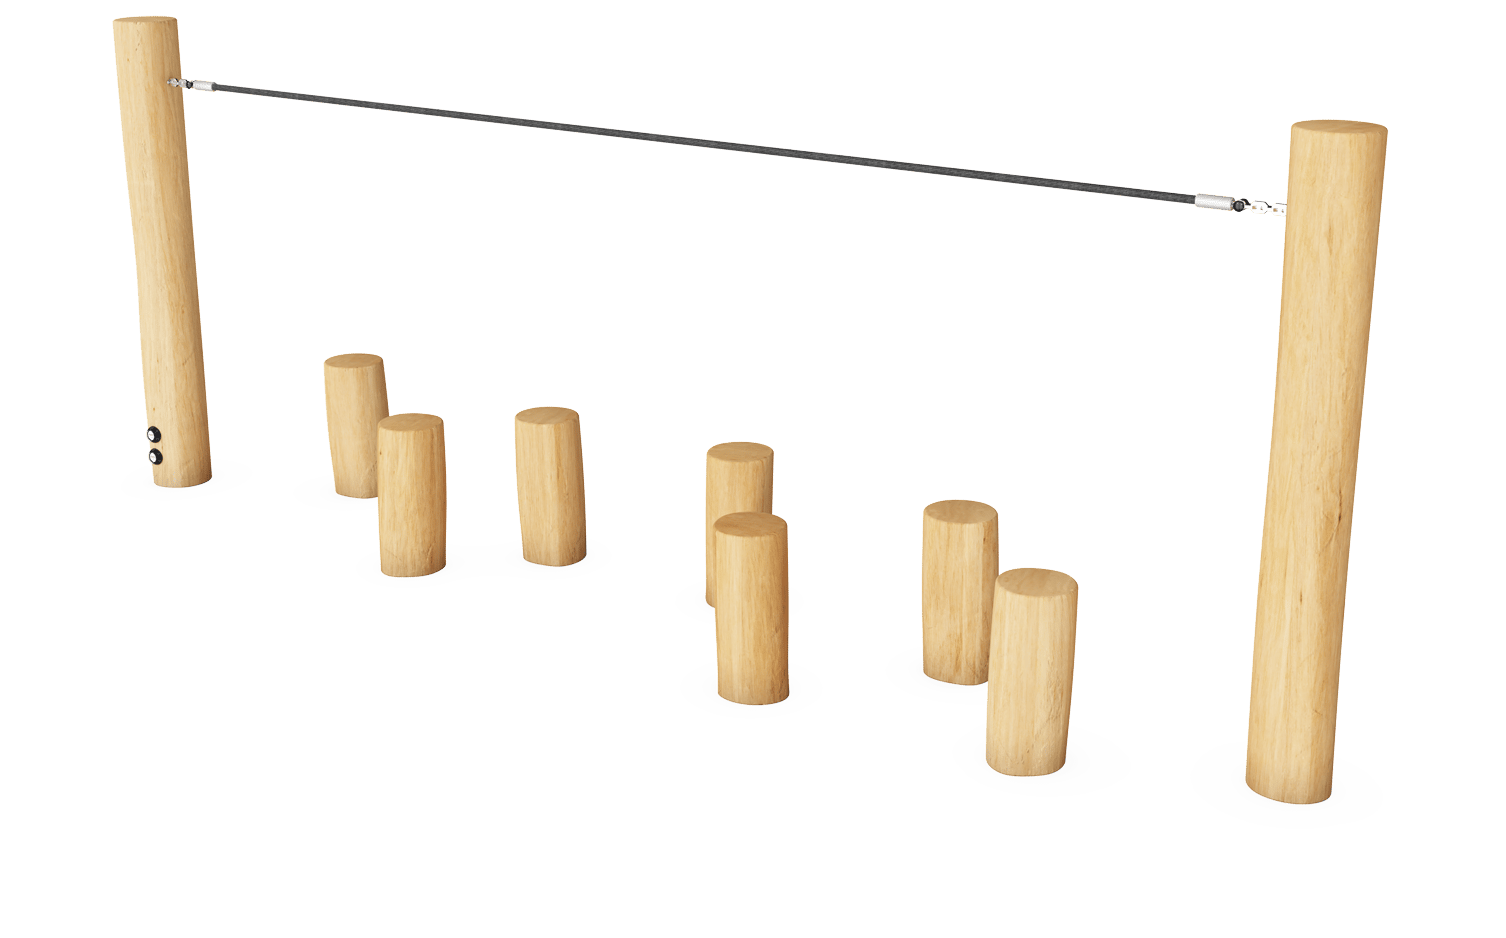 Robinia klimtoestel - Stappalen met touw oversteek